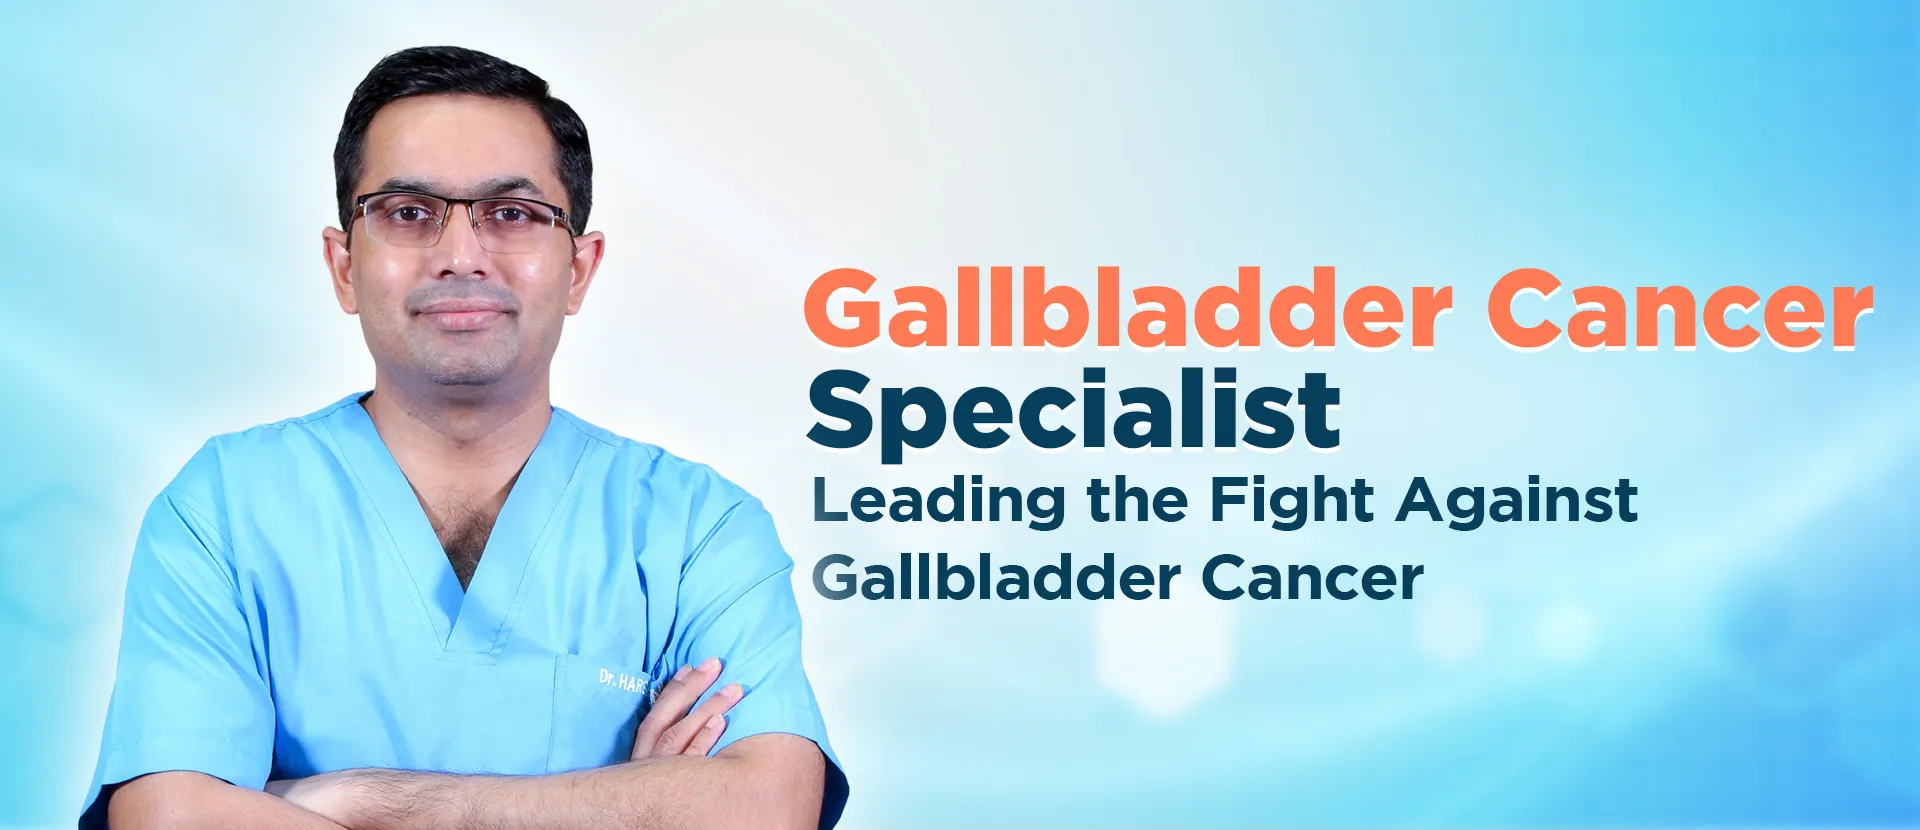 Best gallbladder cancer doctor and gallbladder cancer specialist in Ahmedabad, India